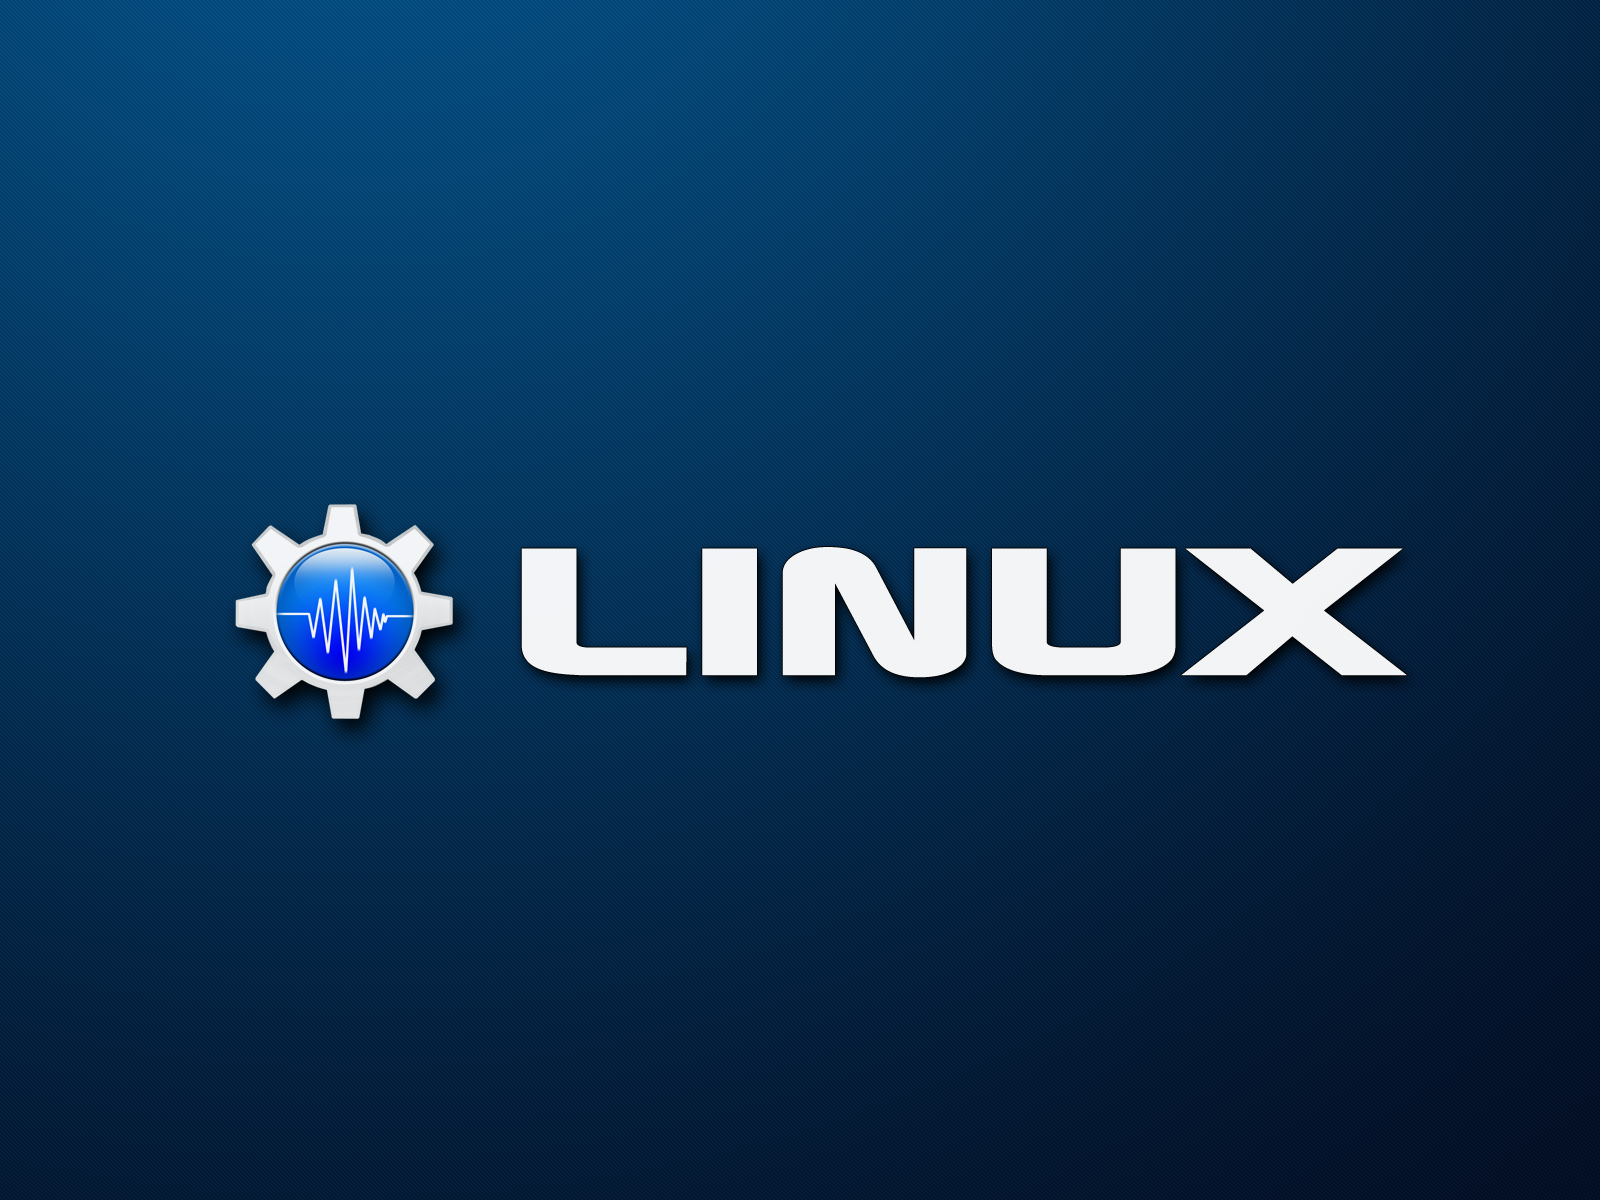 linux commands wallpaper,blue,logo,text,font,azure